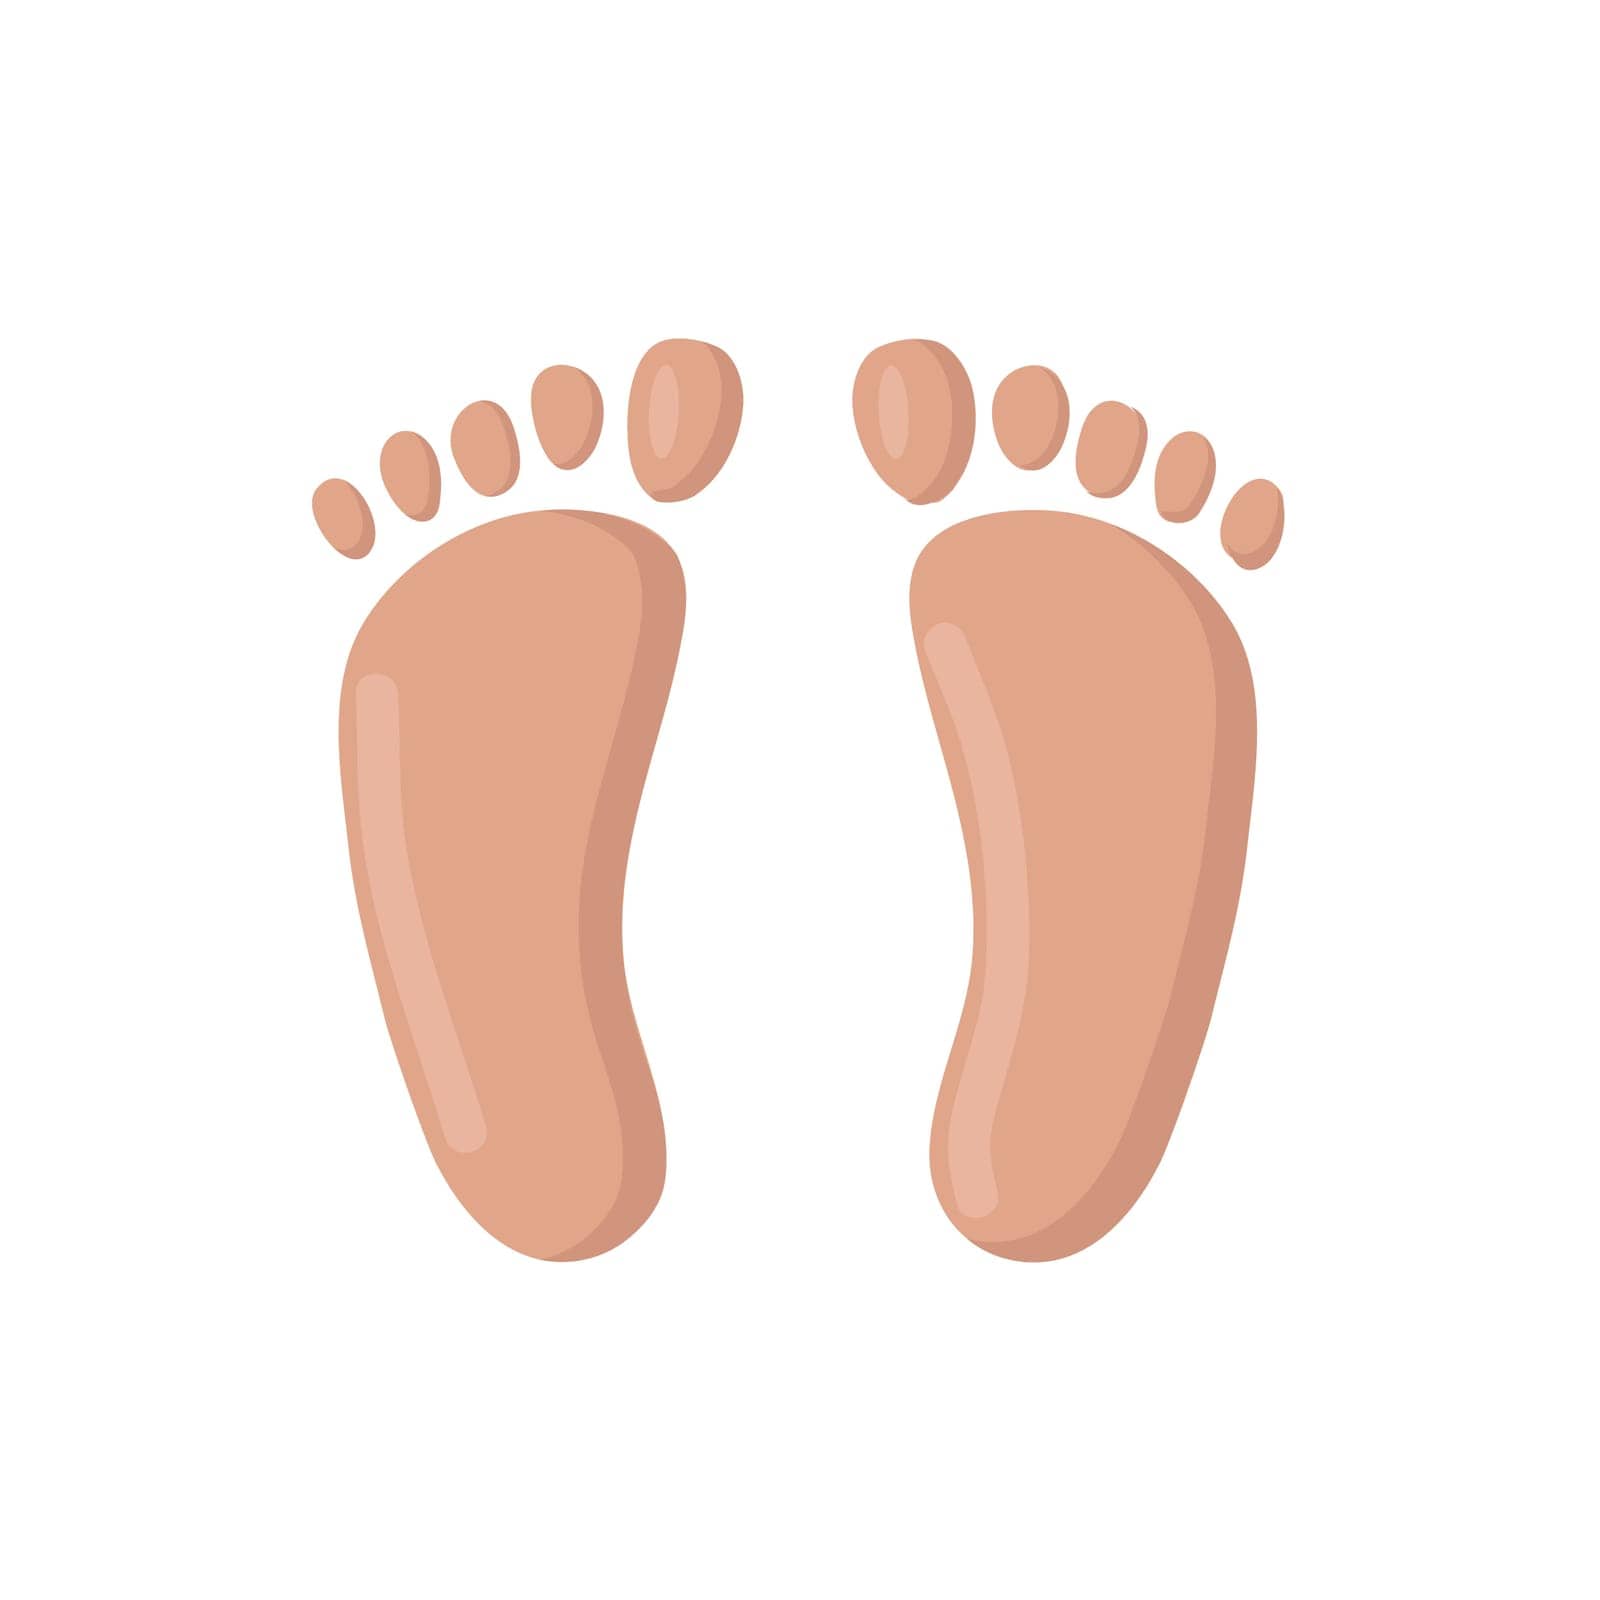 Feet icon clipart avatar logotype isolated vector illustration by SfanatS